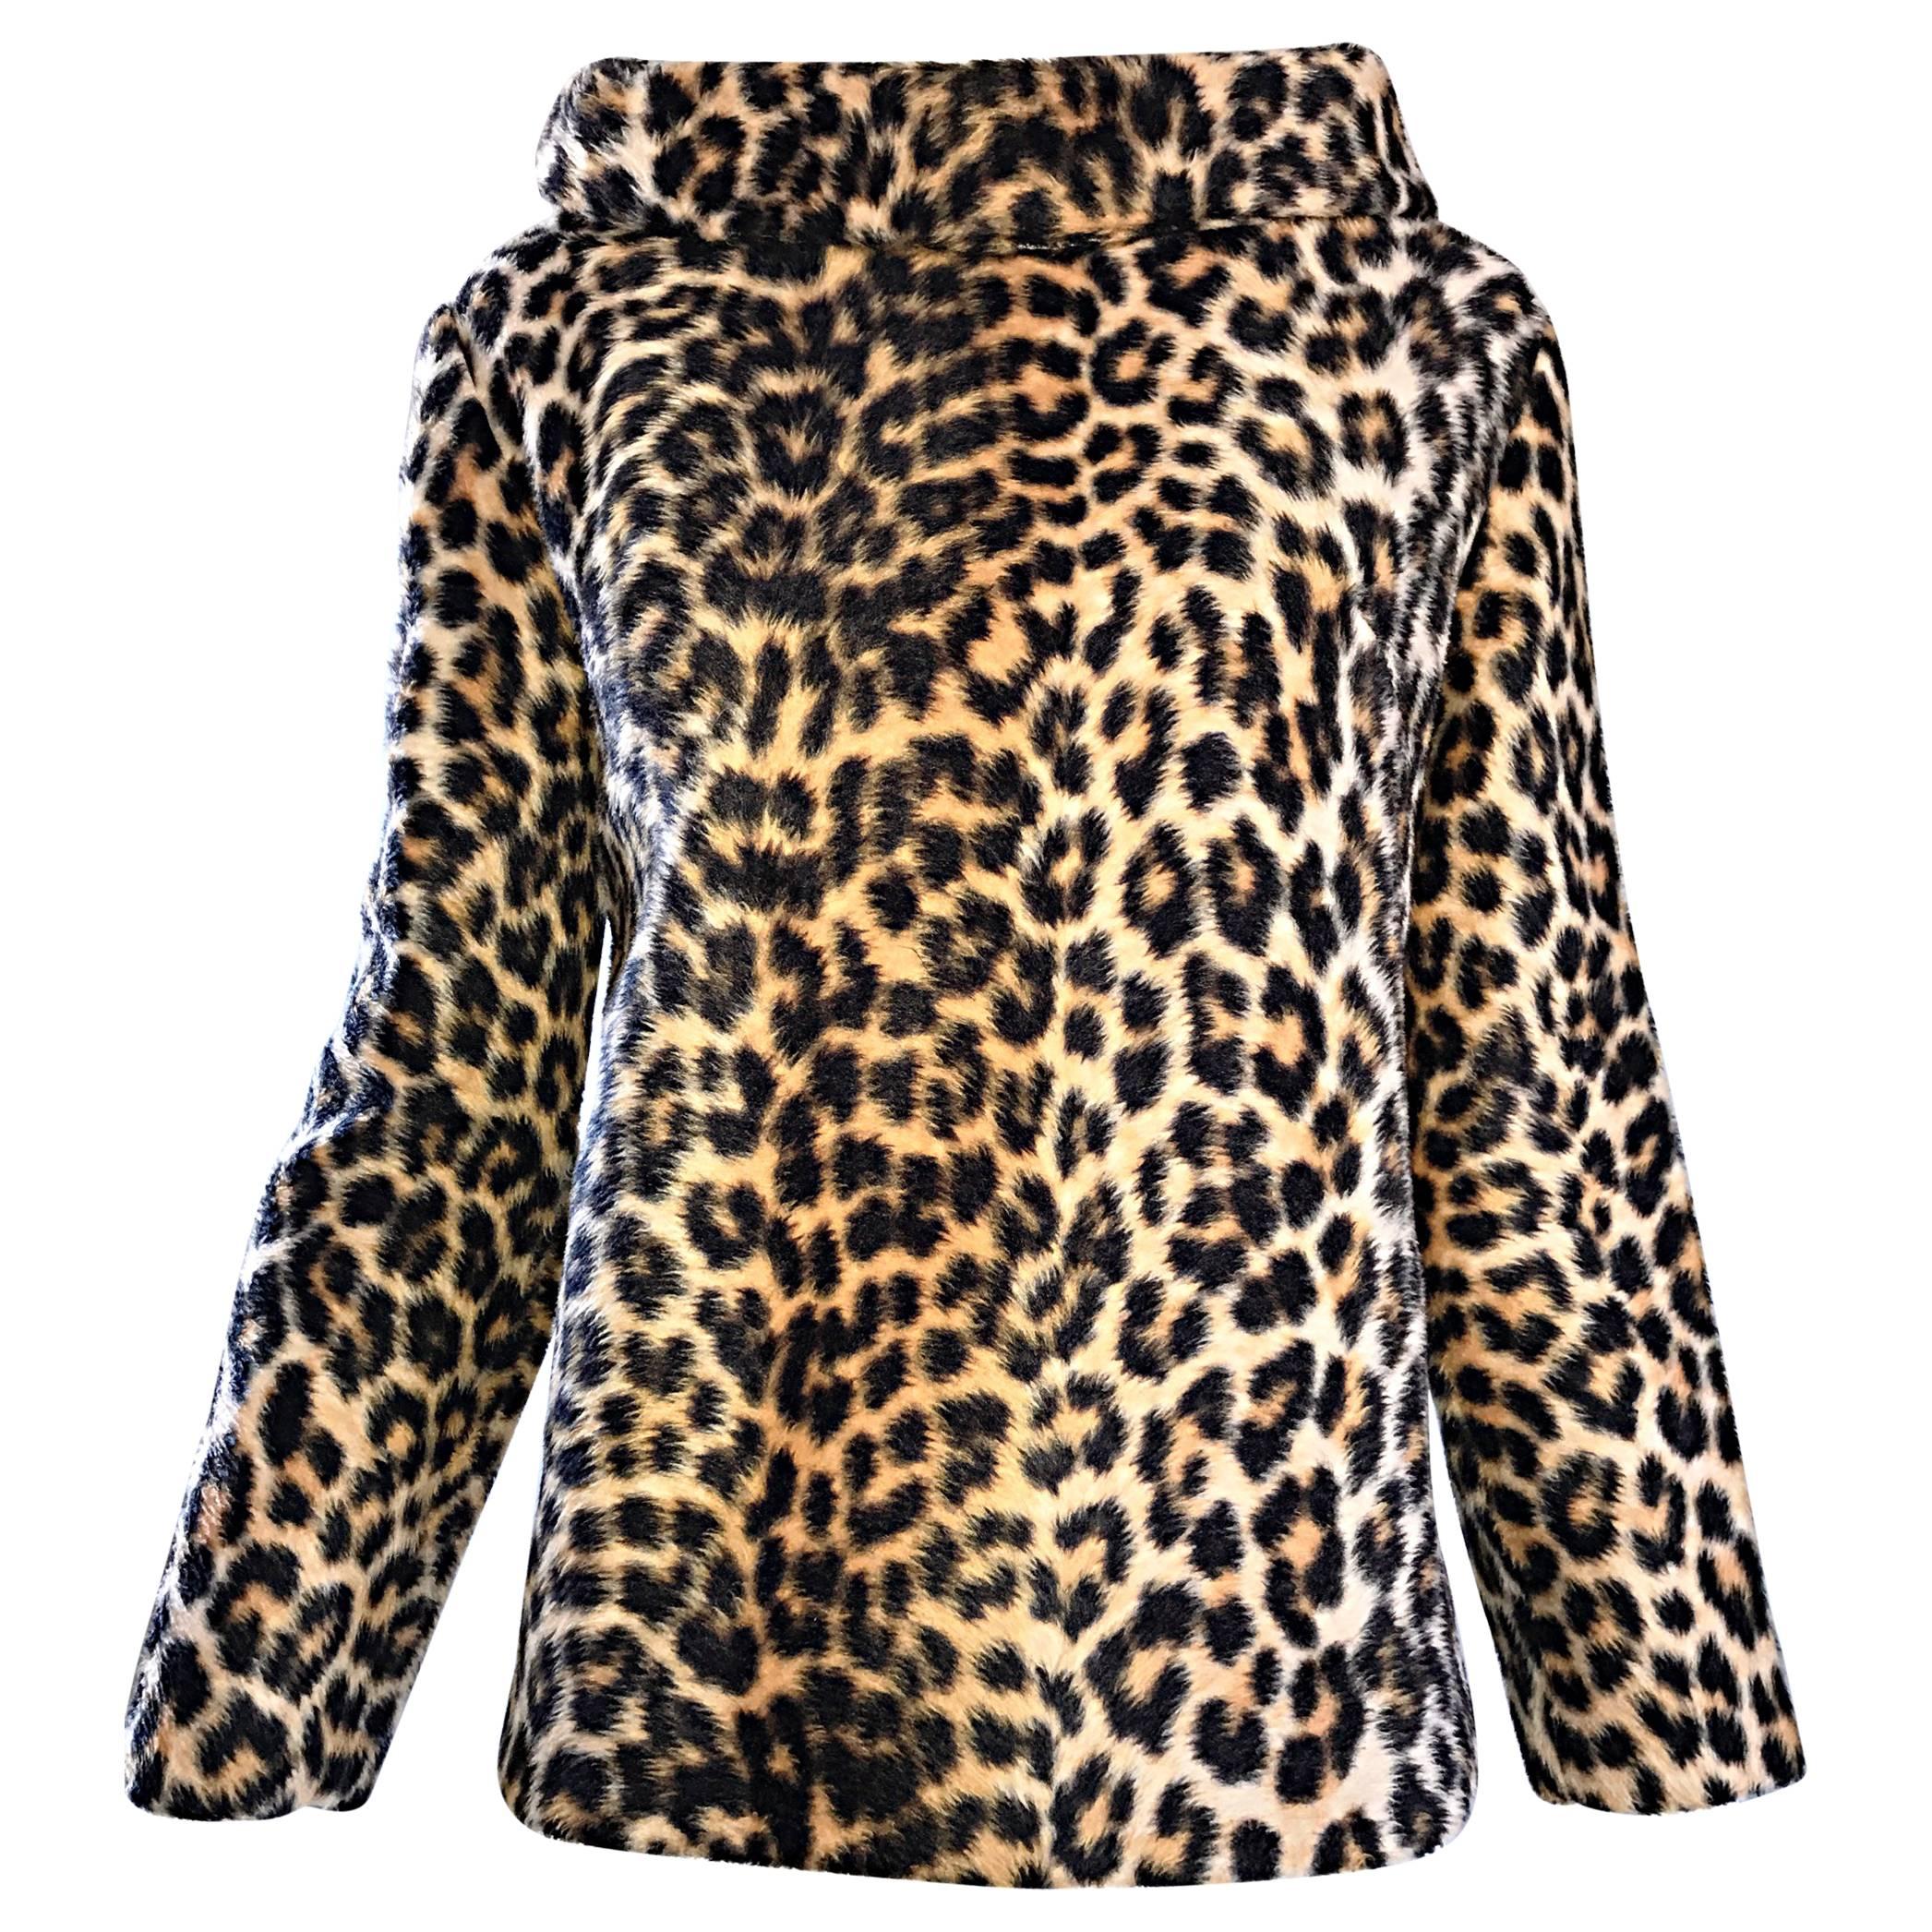 Chic 1960s Faux Fur Leopard Cheetah Print Vintage 60s Long Sleeve Sweater Top  